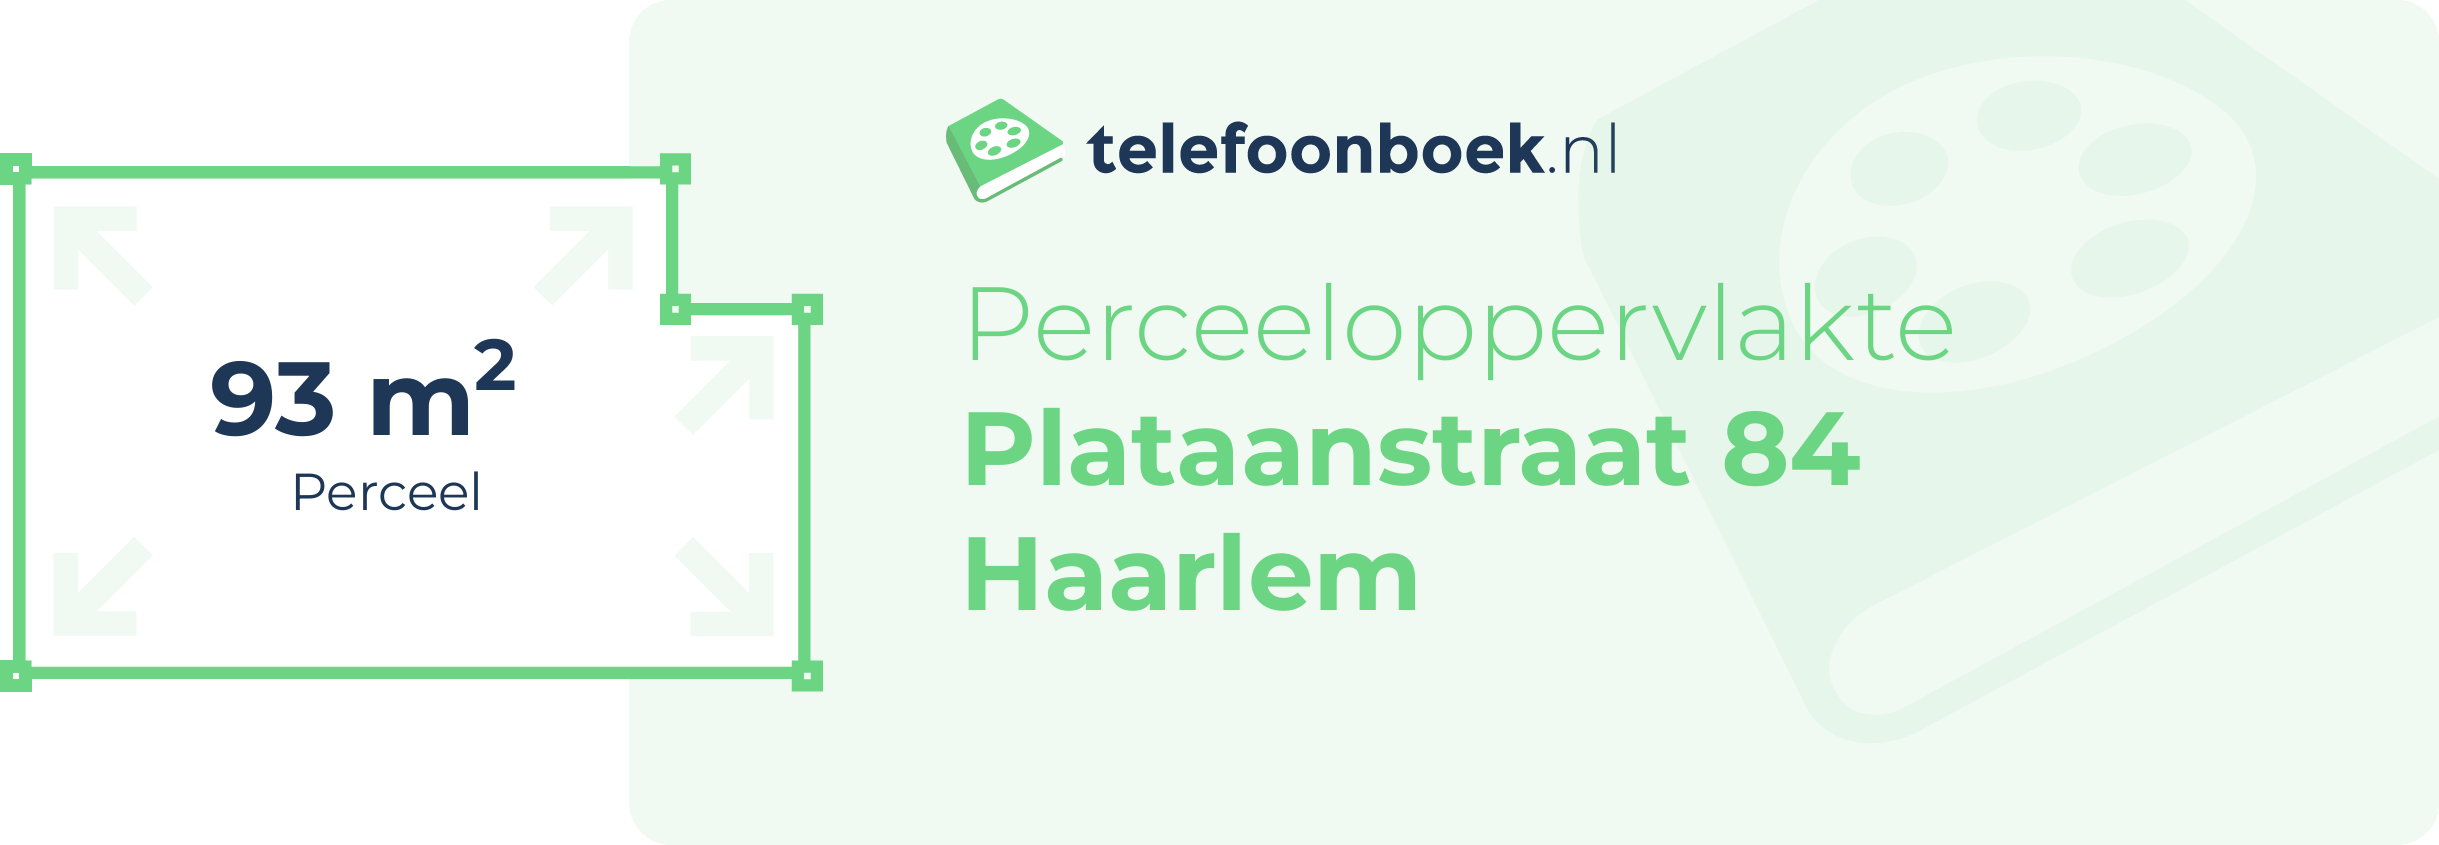 Perceeloppervlakte Plataanstraat 84 Haarlem